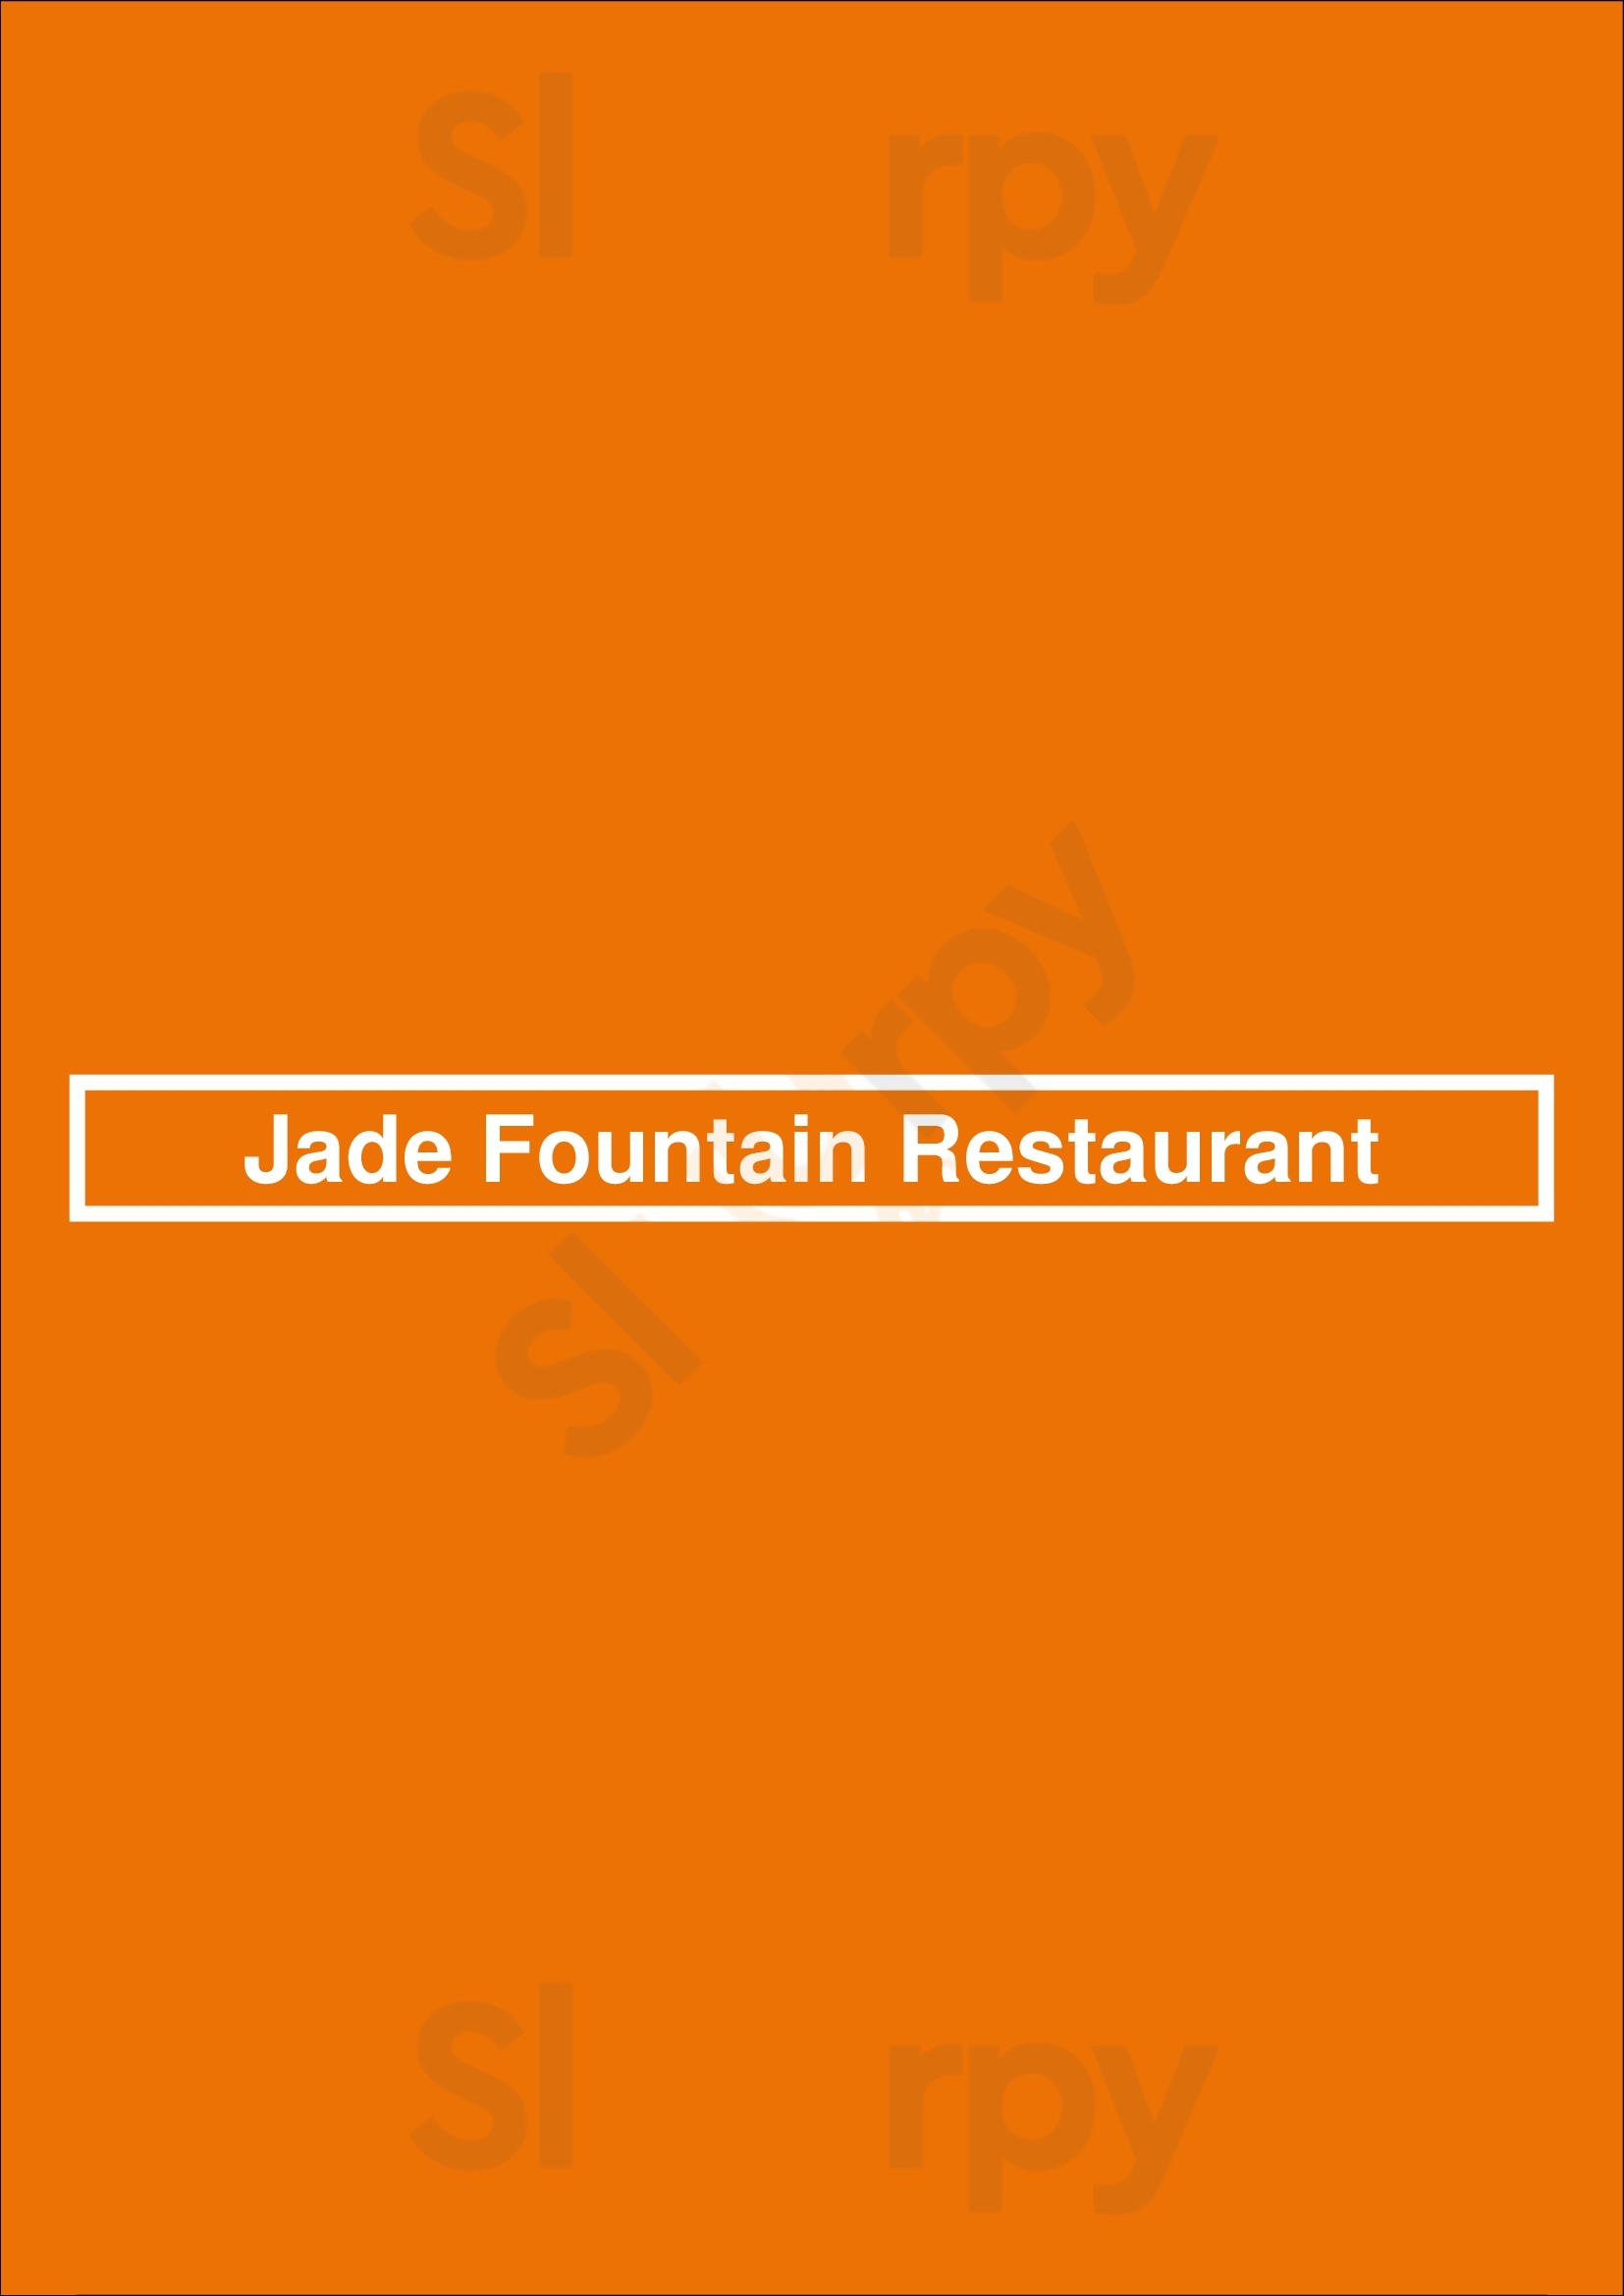 Jade Fountain Restaurant Victoria Menu - 1